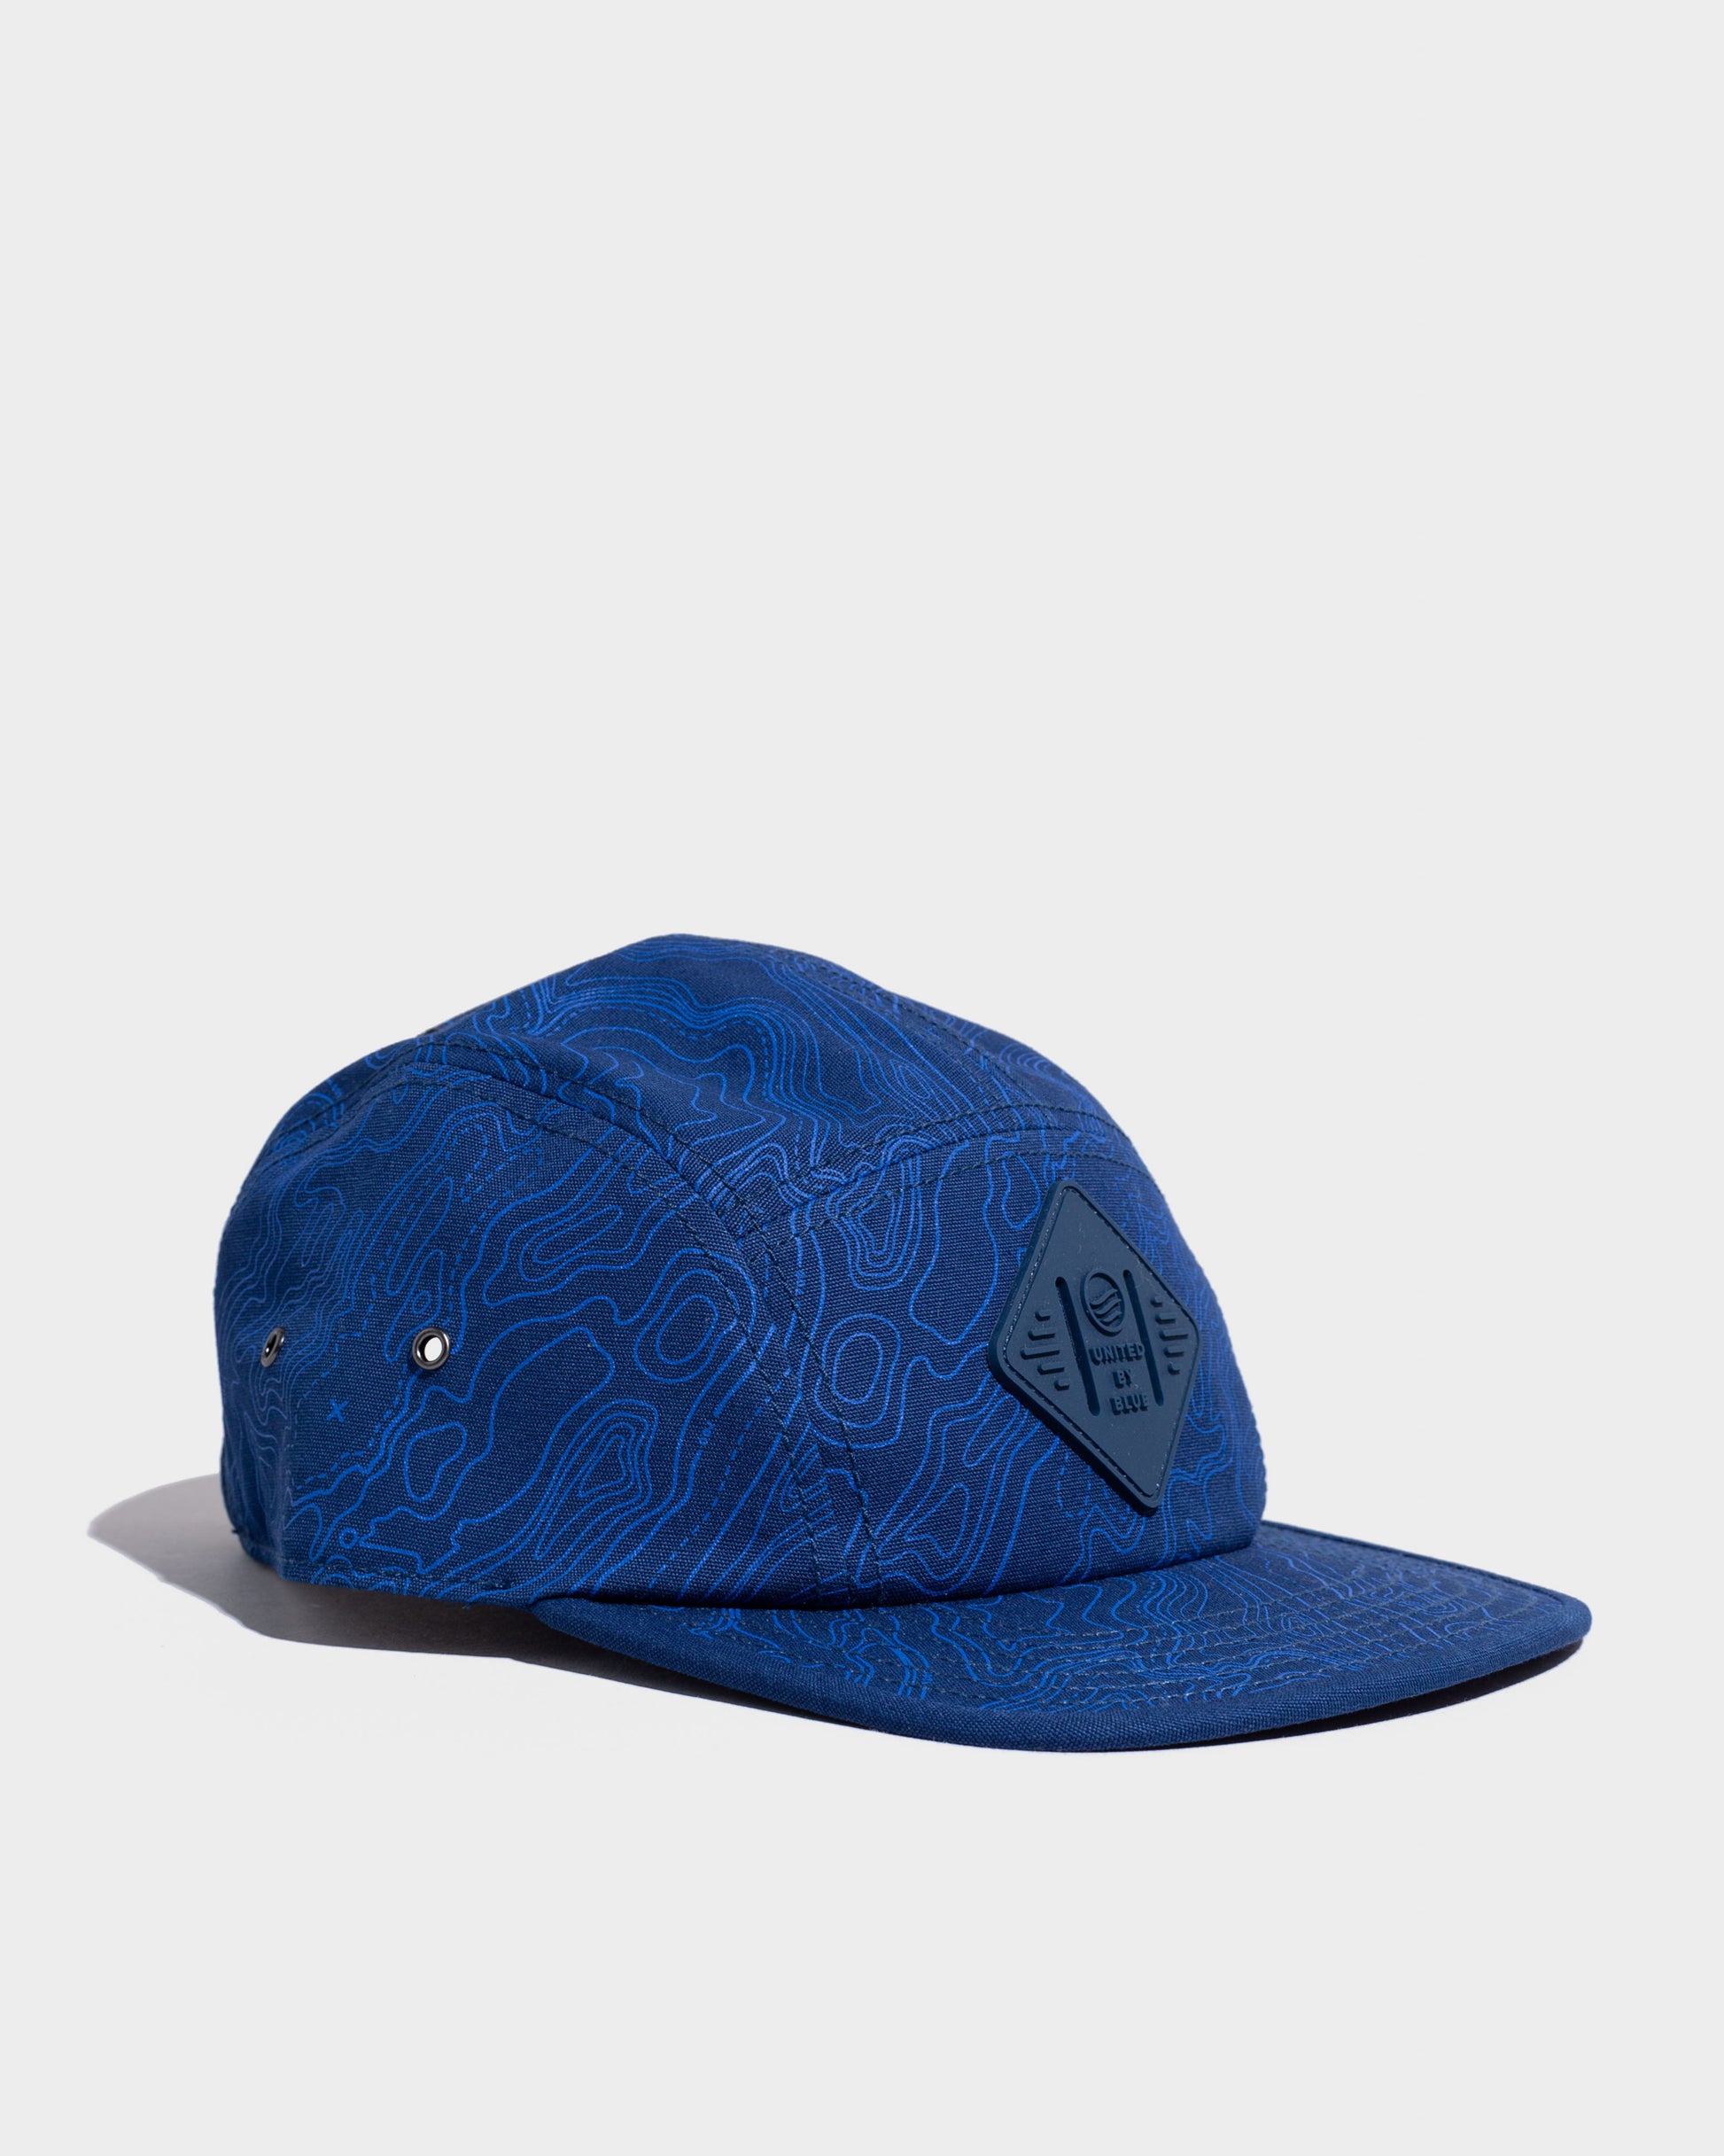 Hat Not Hate Bundle: 5/8 Universal Hat Loom (1x1 Blue +Tan) + Blue